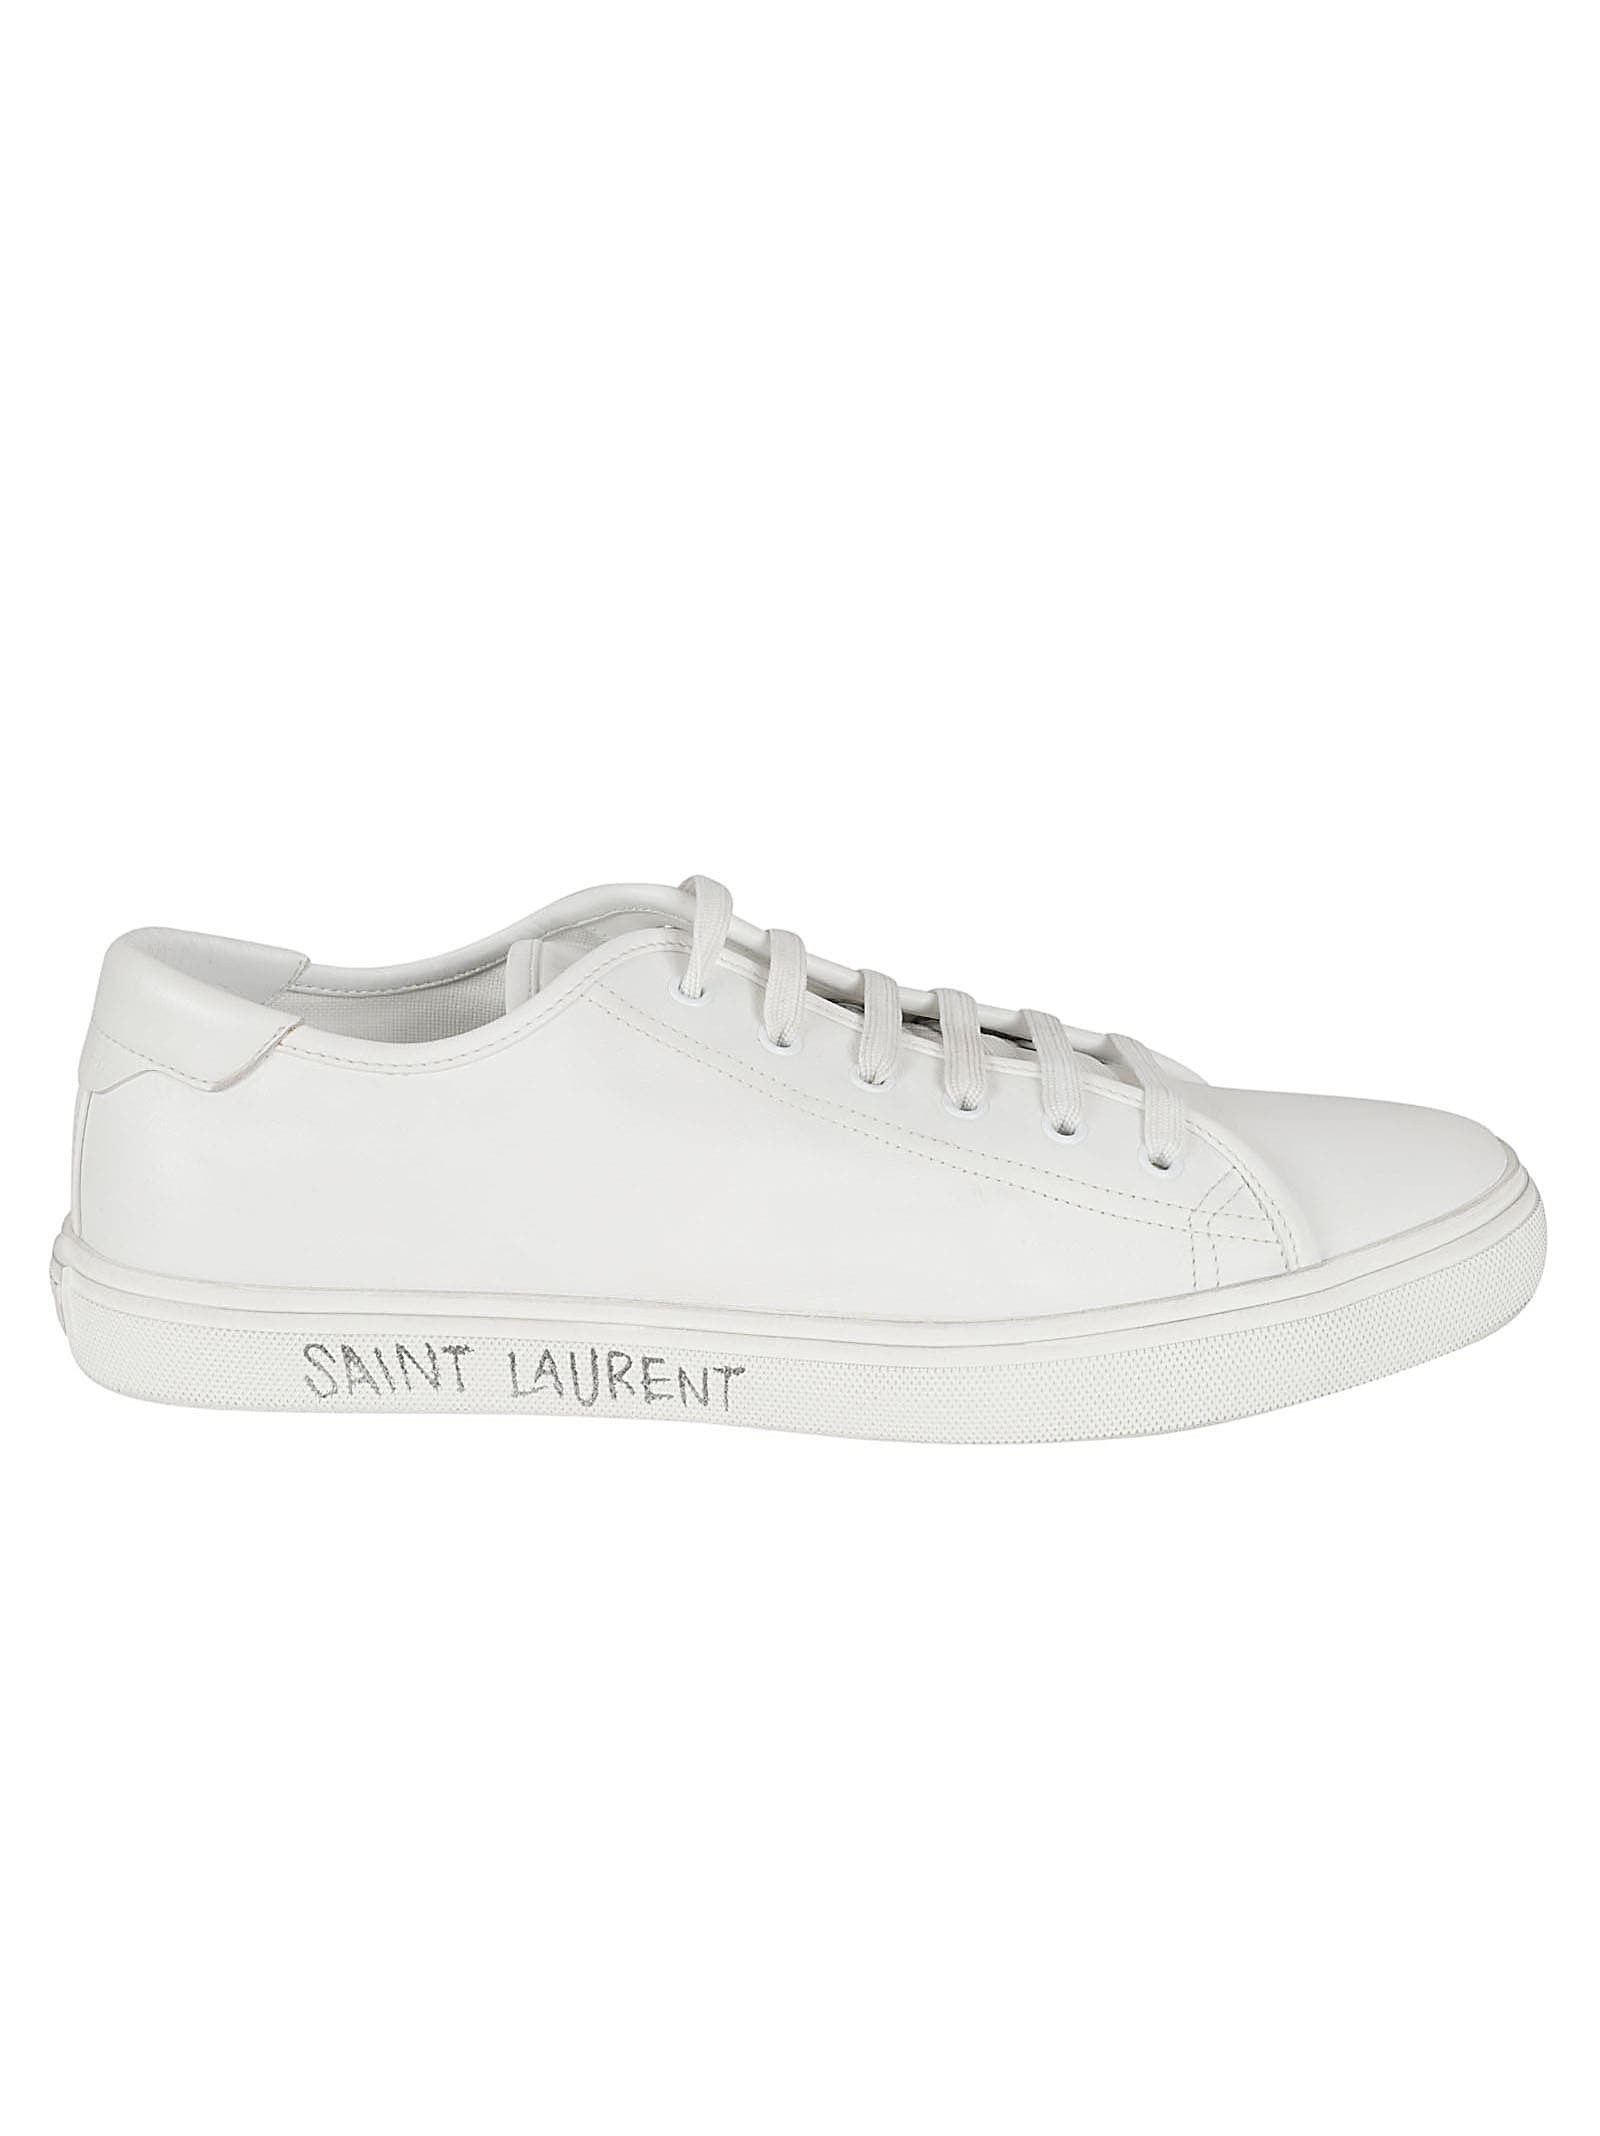 Shop Saint Laurent Malibu L T Sneakers